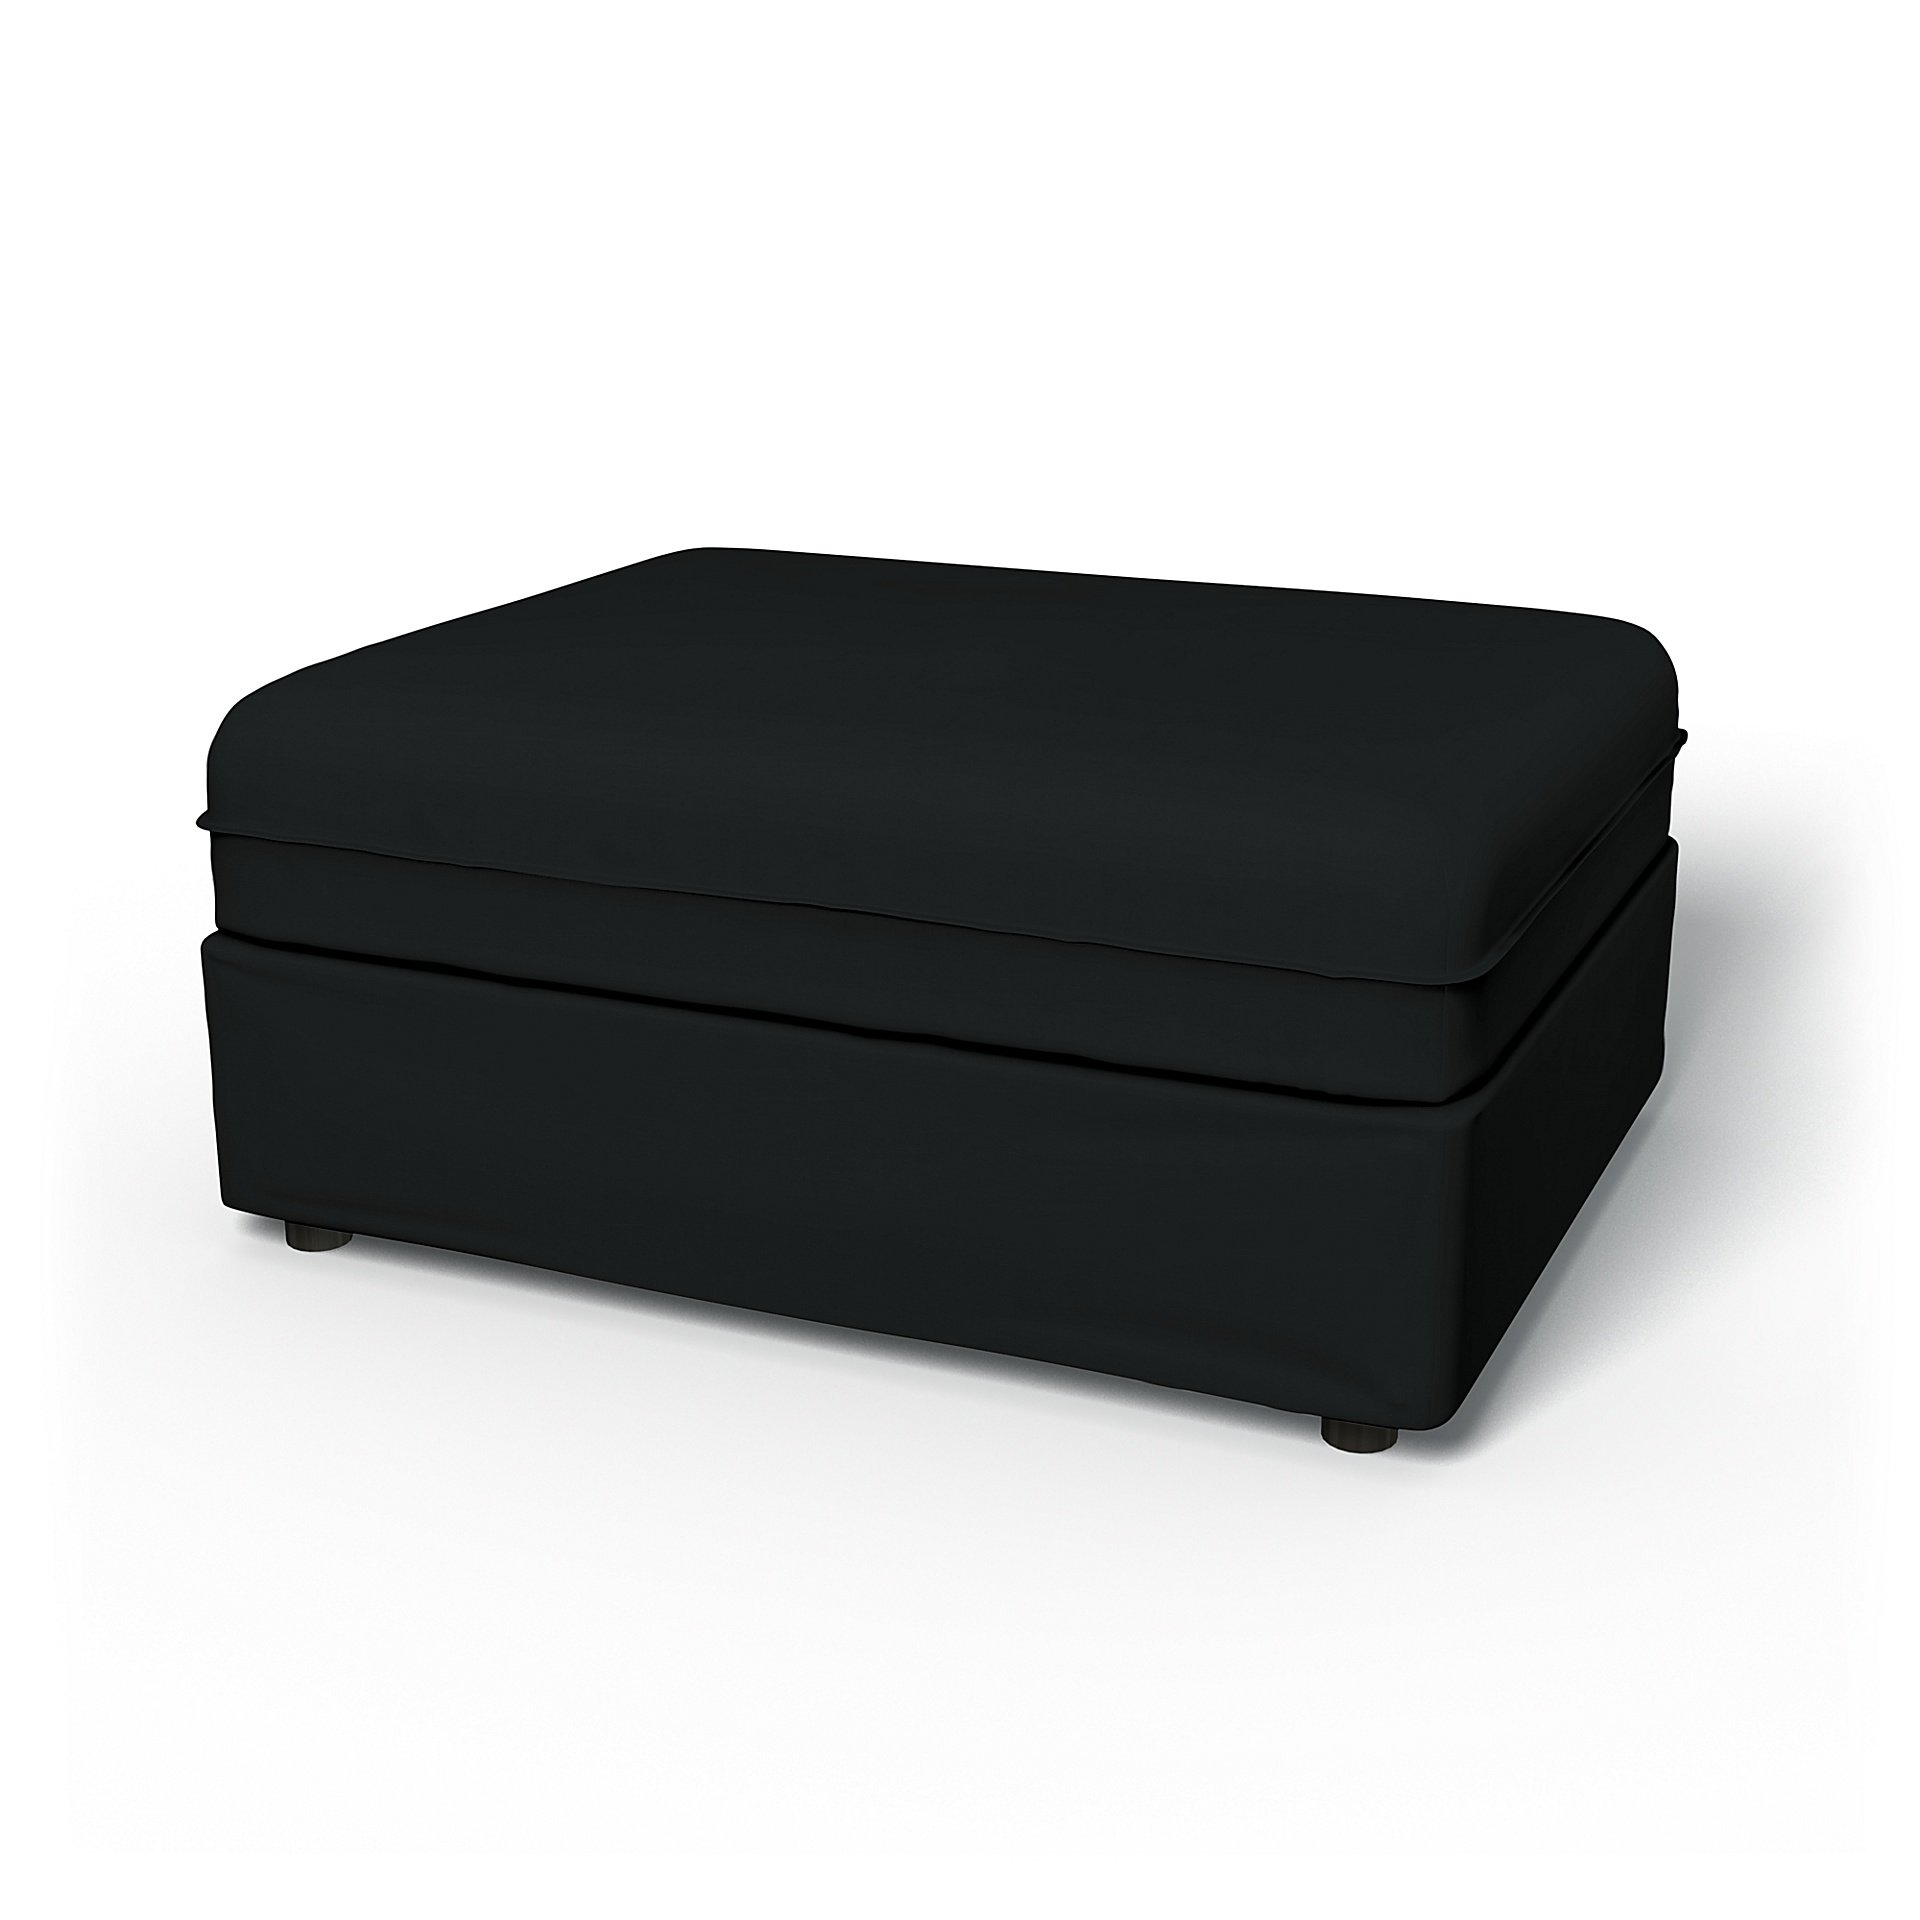 IKEA - Vallentuna Seat Module Cover 100x80cm 39x32in, Jet Black, Cotton - Bemz